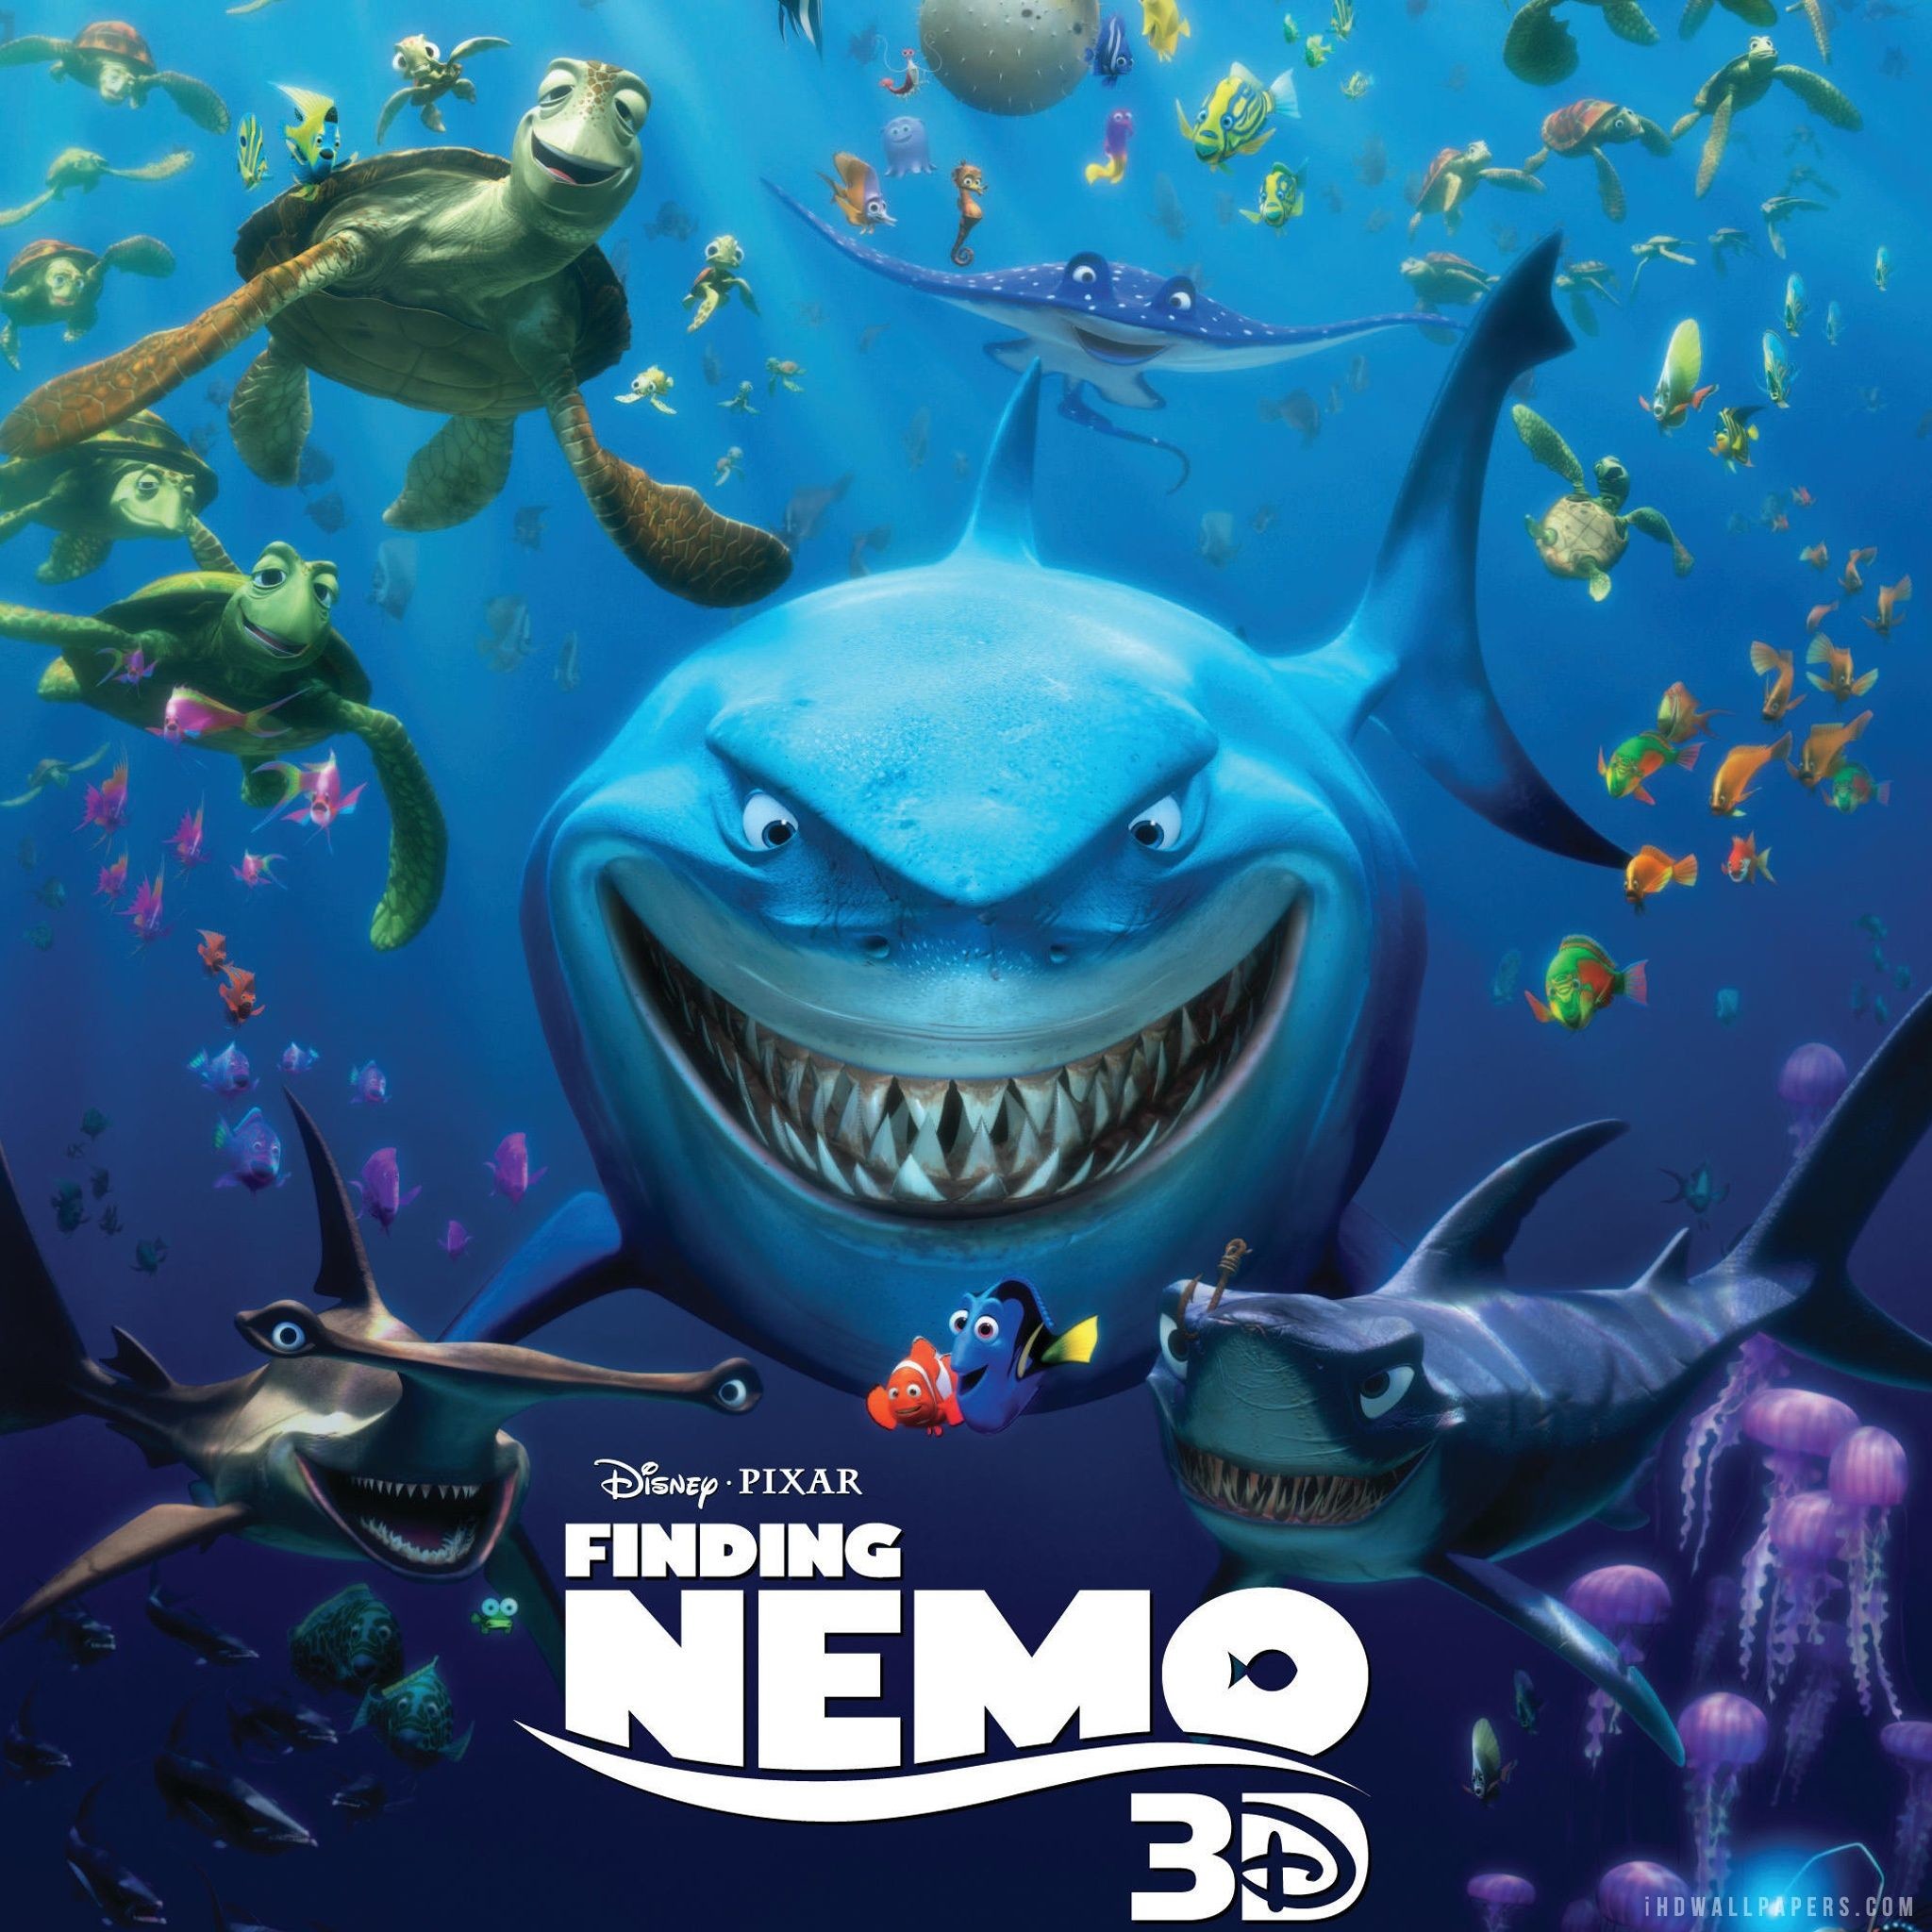 2048x2048 Finding Nemo 3D HD Wallpaper - iHD Wallpapers